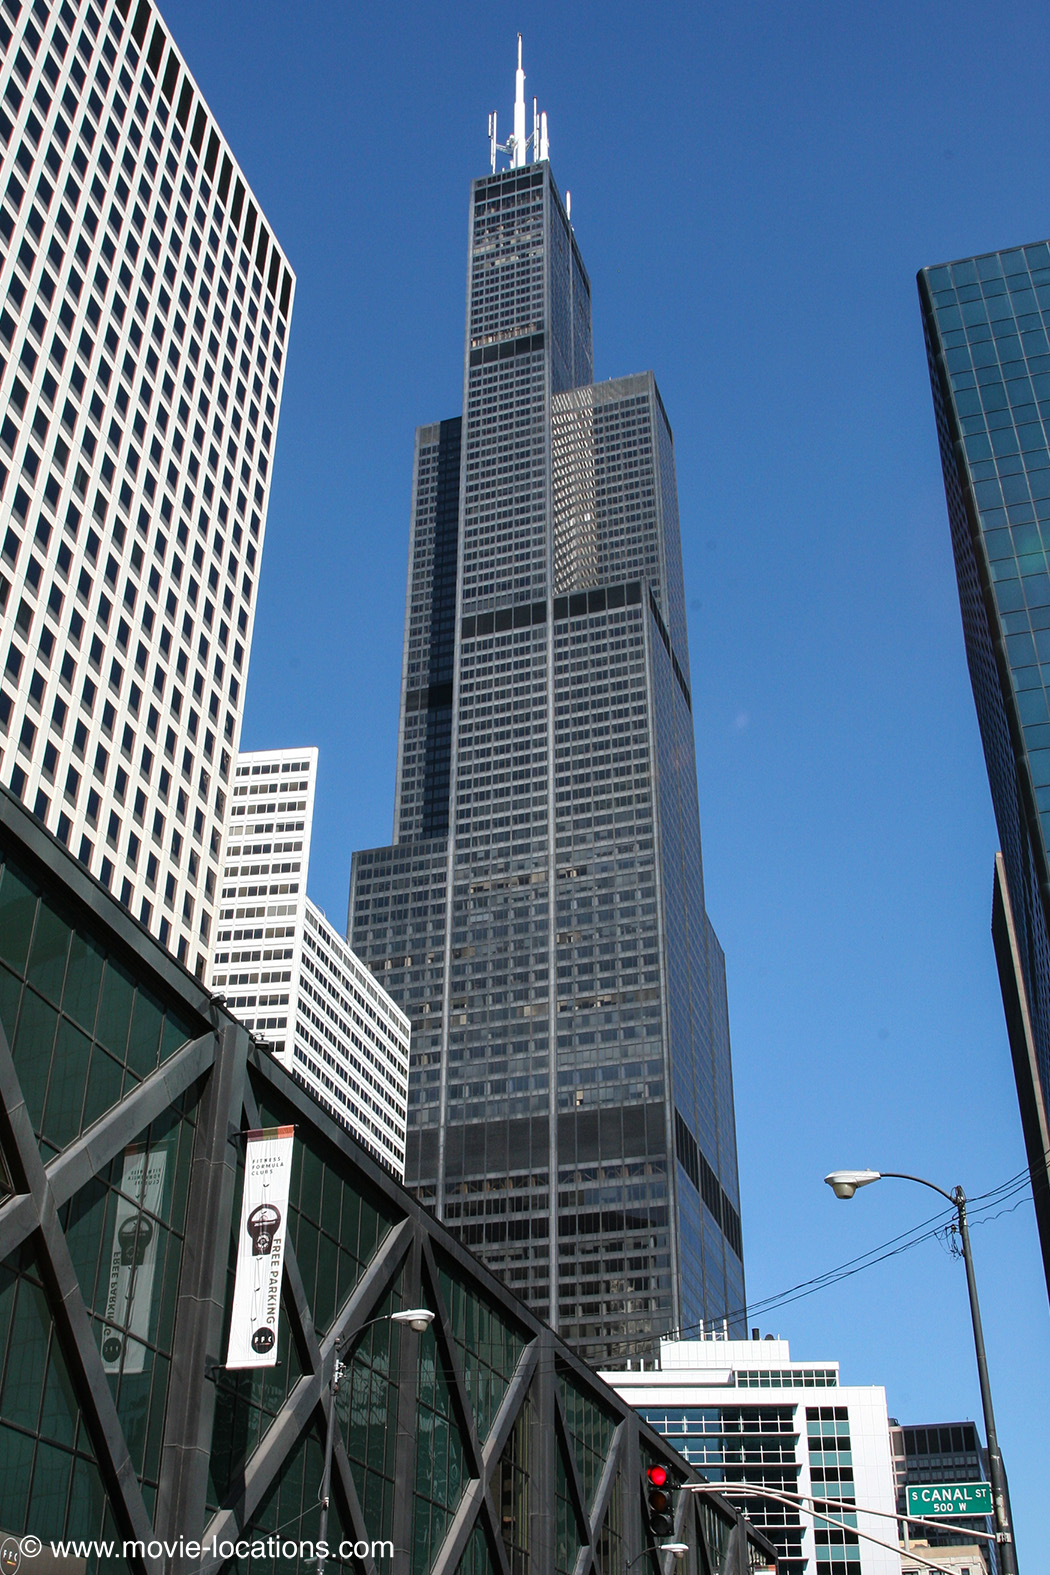 The Dark Knight film location: Sears Tower, Chicago